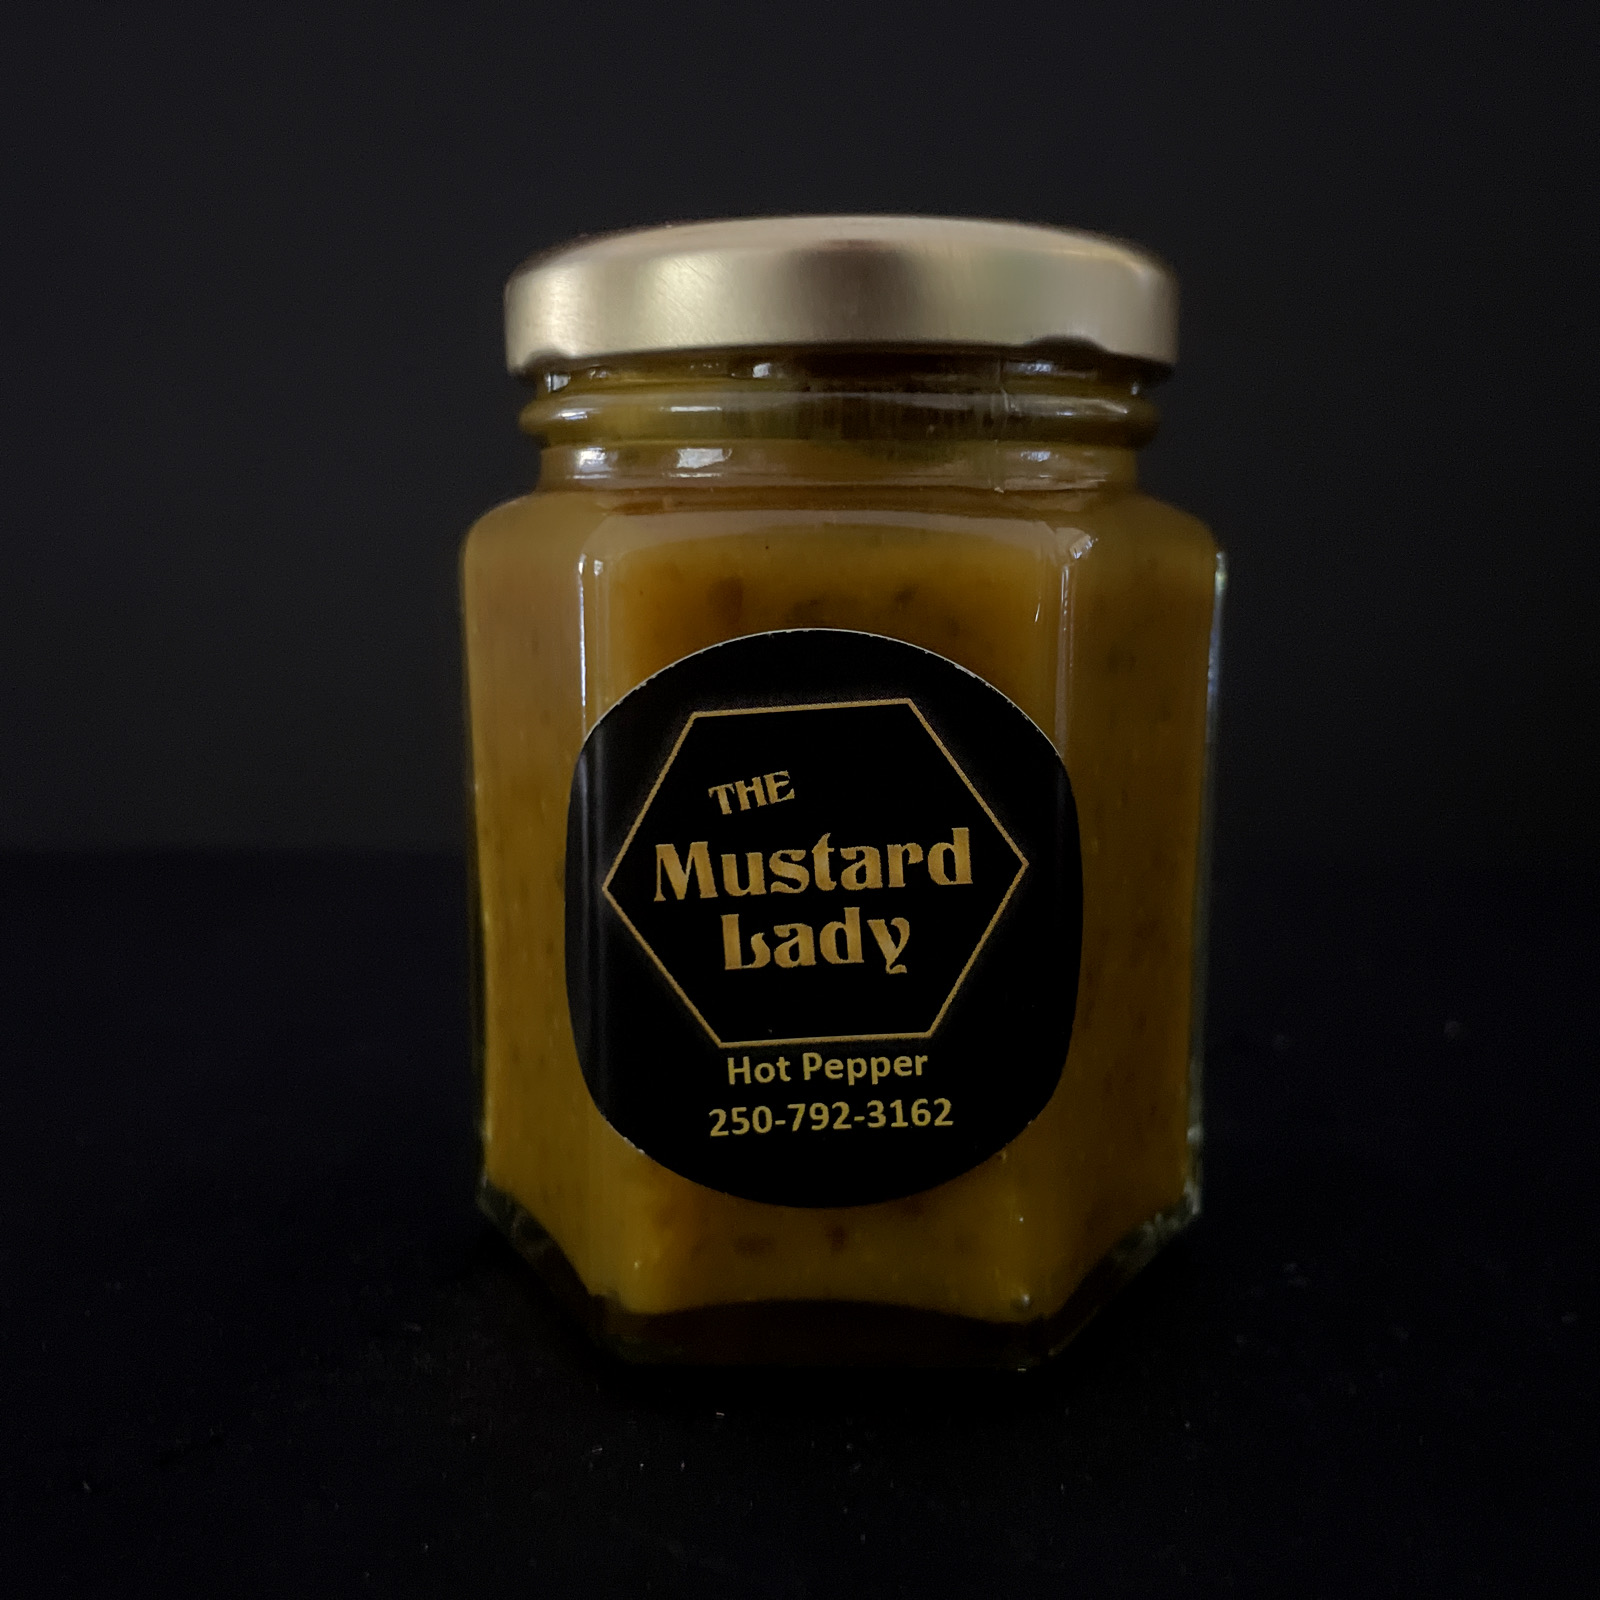 The Mustard Lady: Hot Pepper Mustard